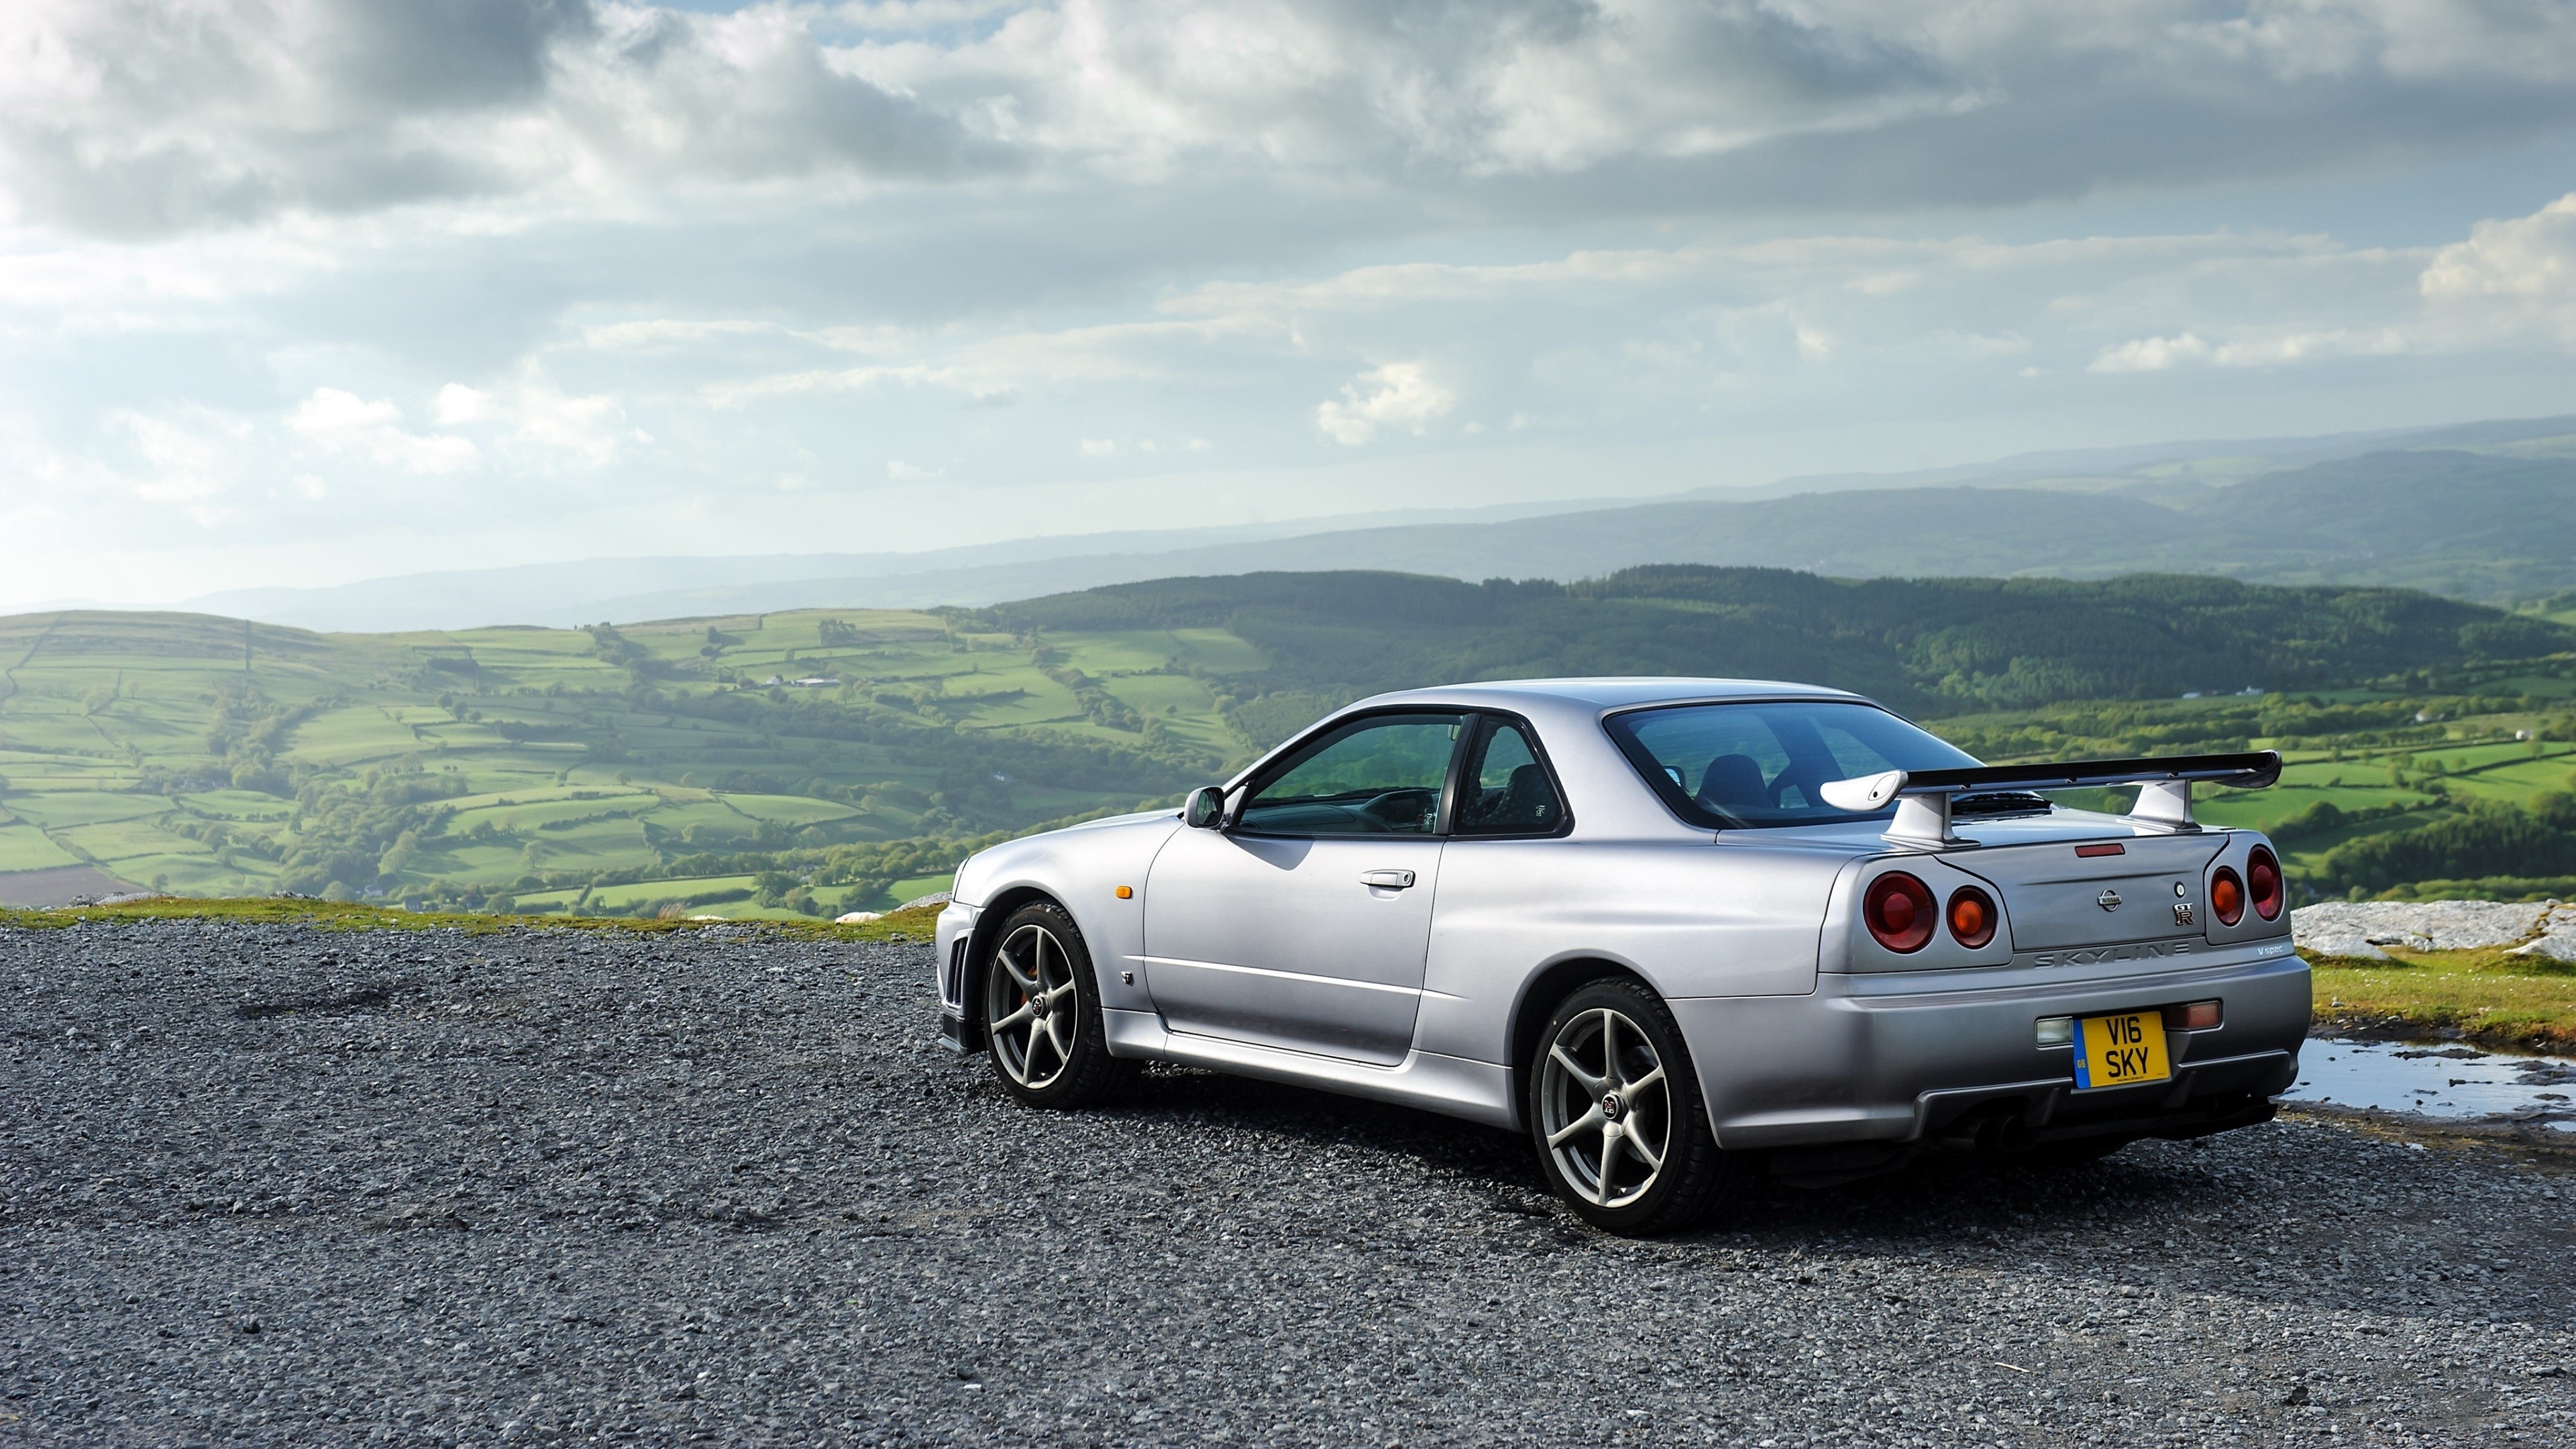 GTR Skyline, Ultra HD wallpaper, Automotive perfection, Striking visuals, 3840x2160 4K Desktop